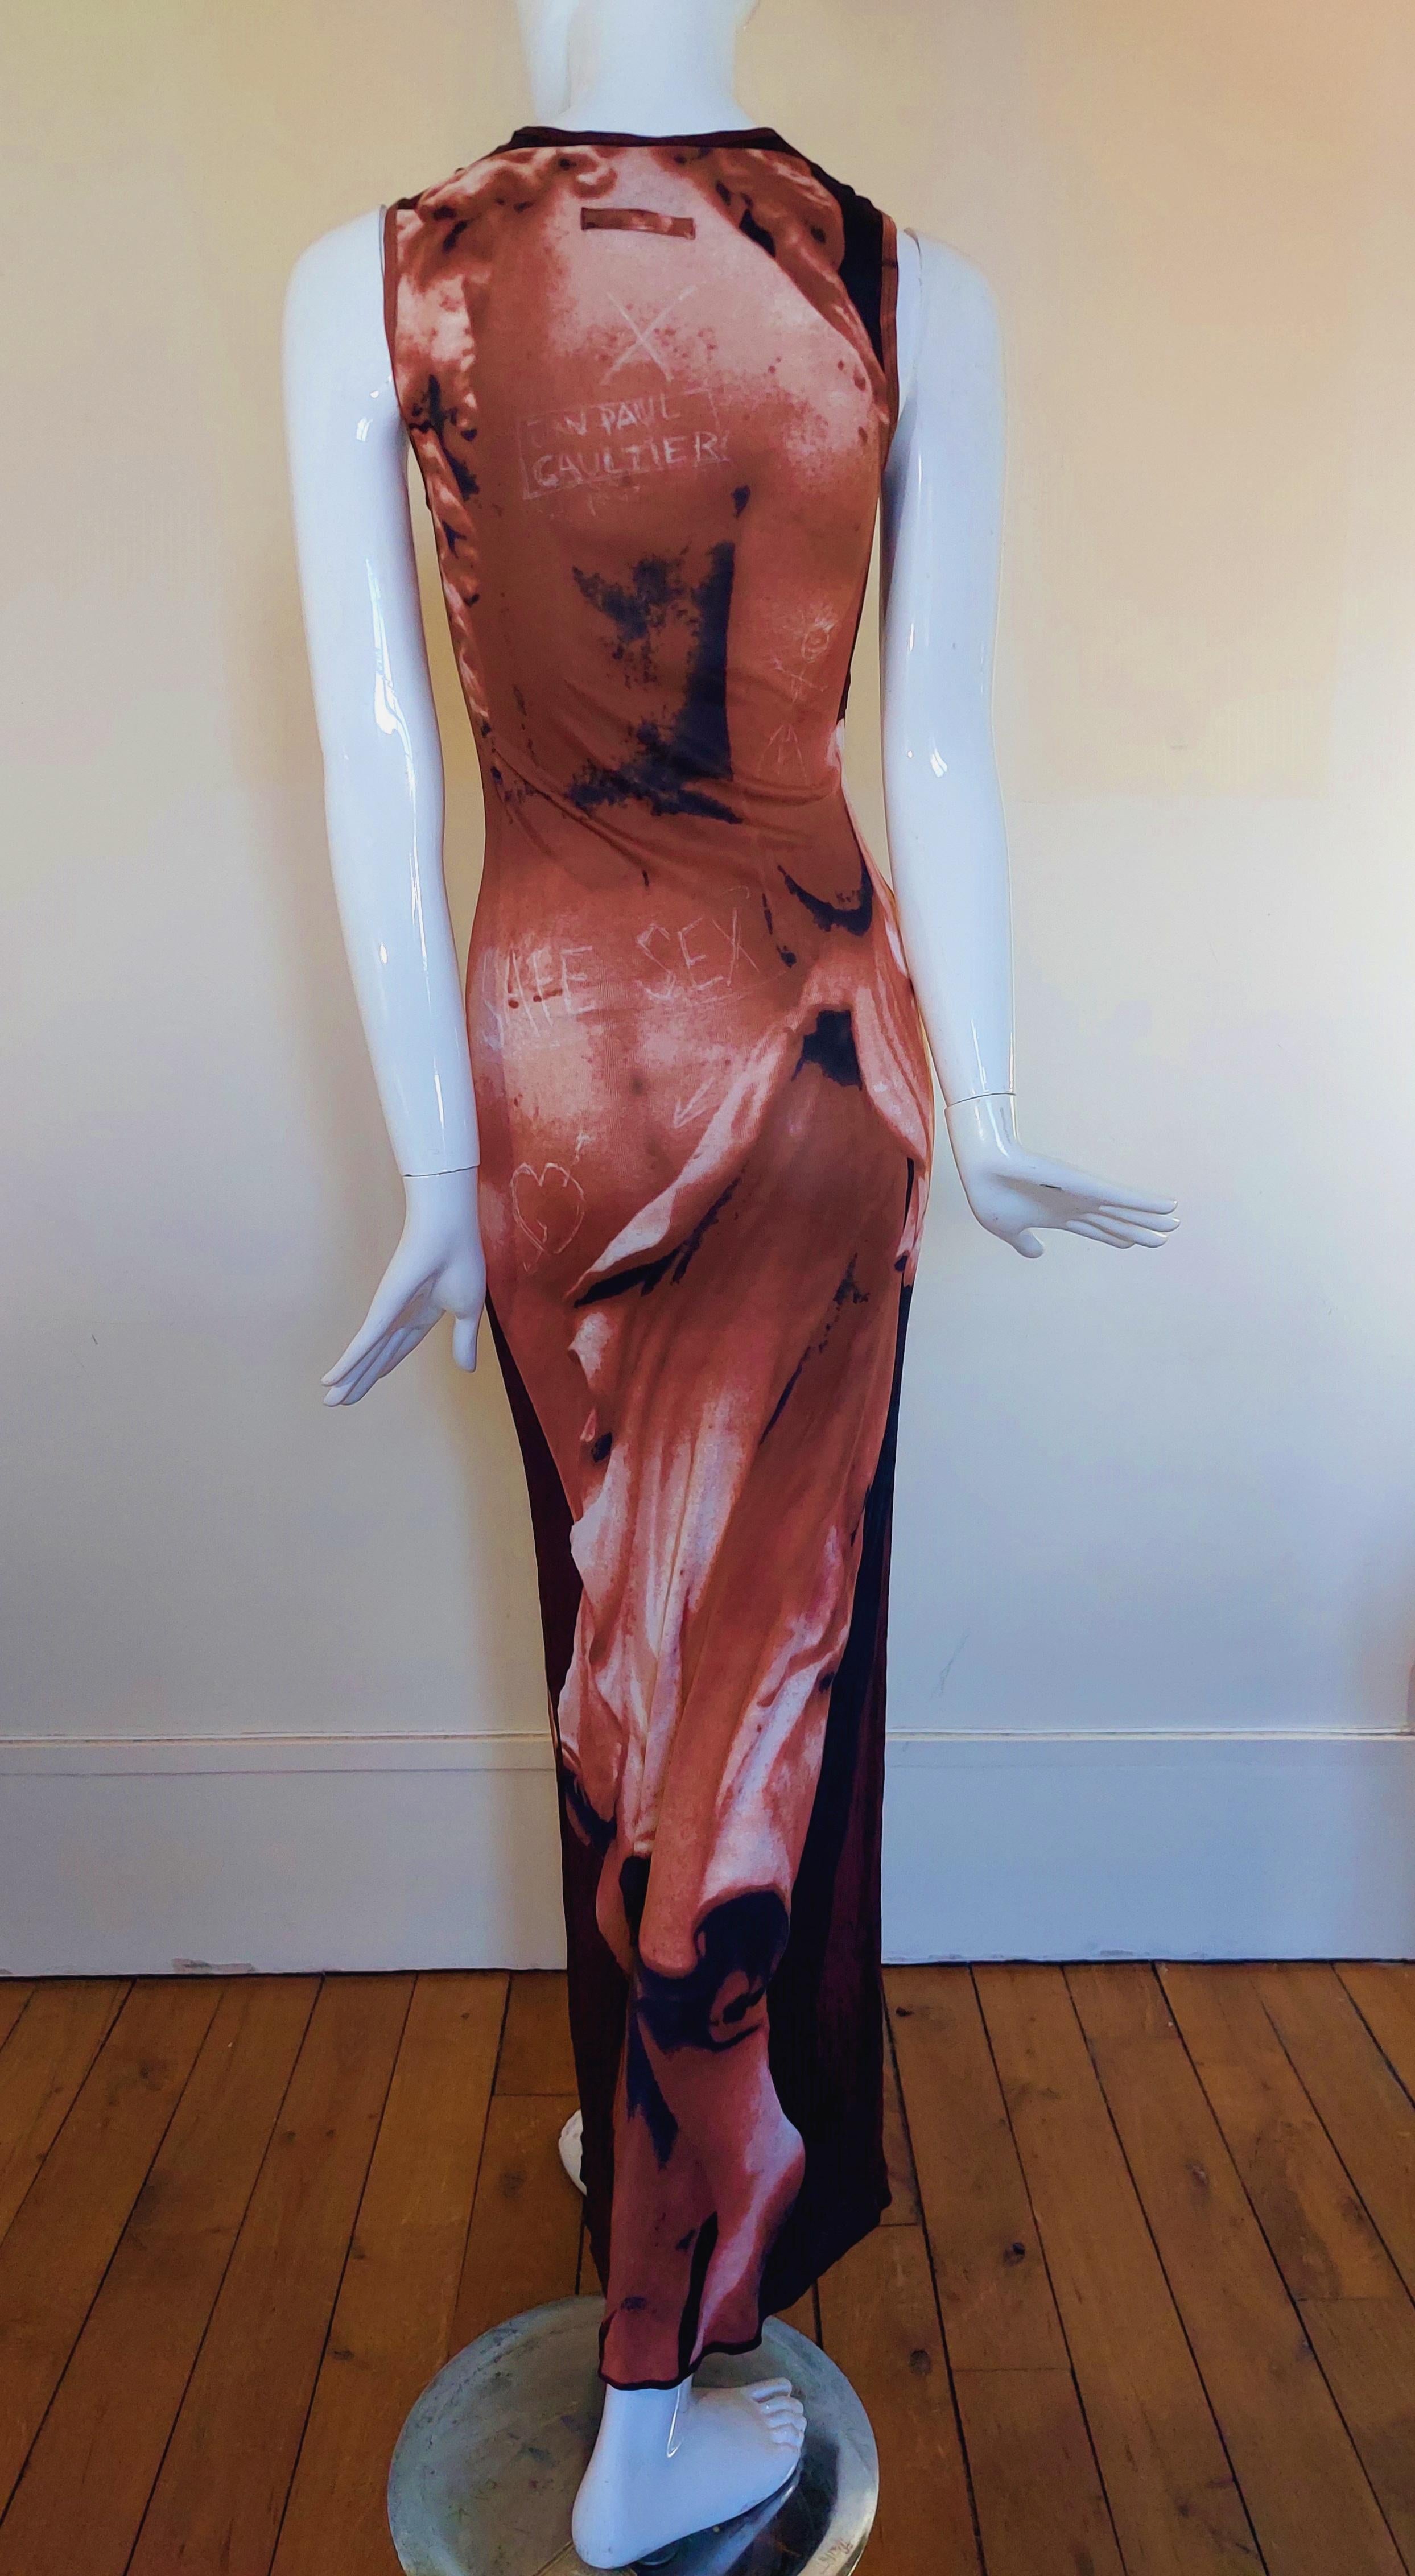 Jean Paul Gaultier S1999 Graffiti Goddess Venus Nude Trompe L'oeil Runway Dress For Sale 7